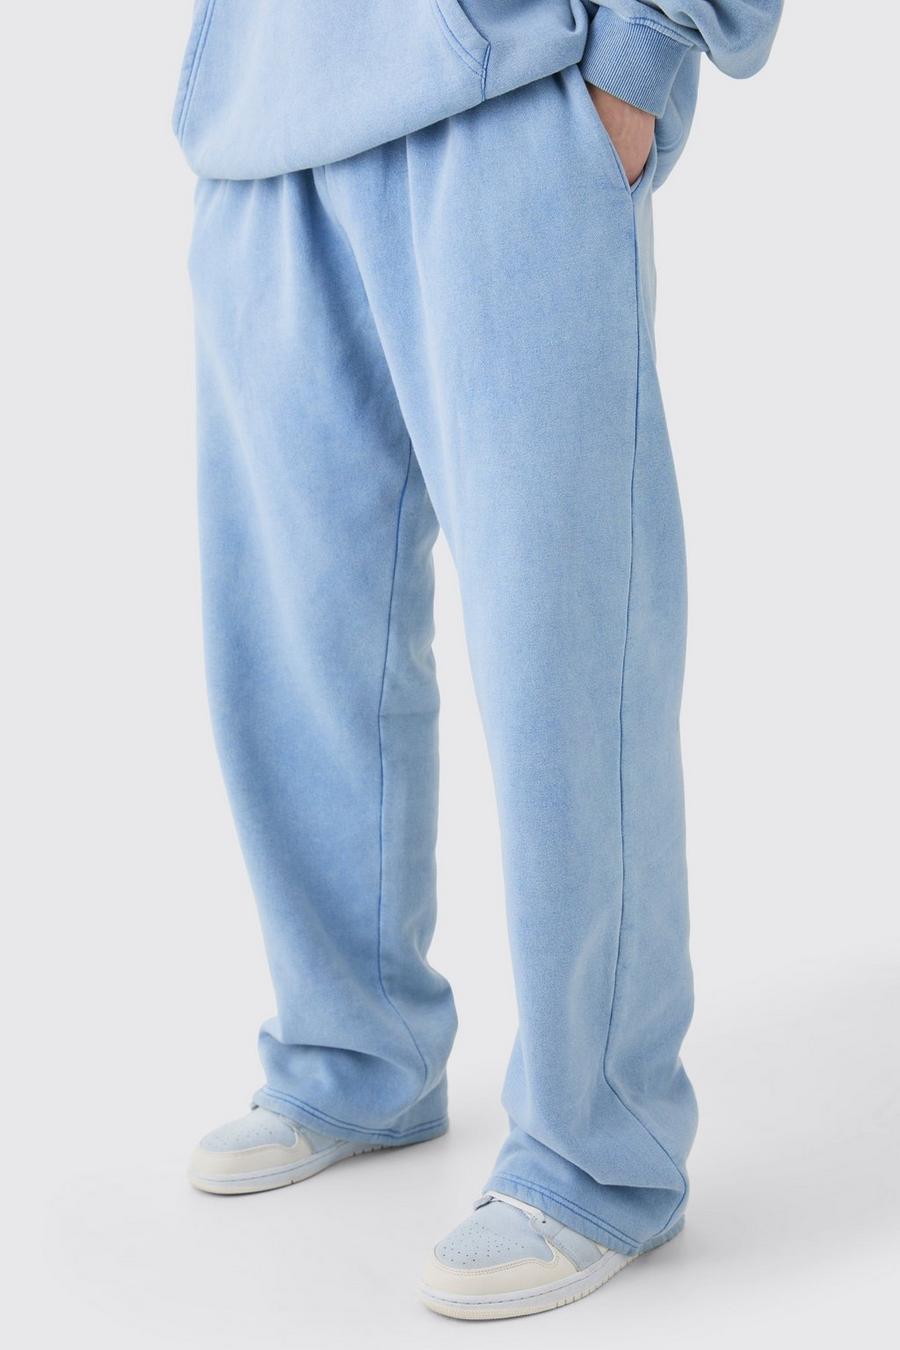 Pantalón deportivo Tall holgado lavado a la piedra, Cornflower blue